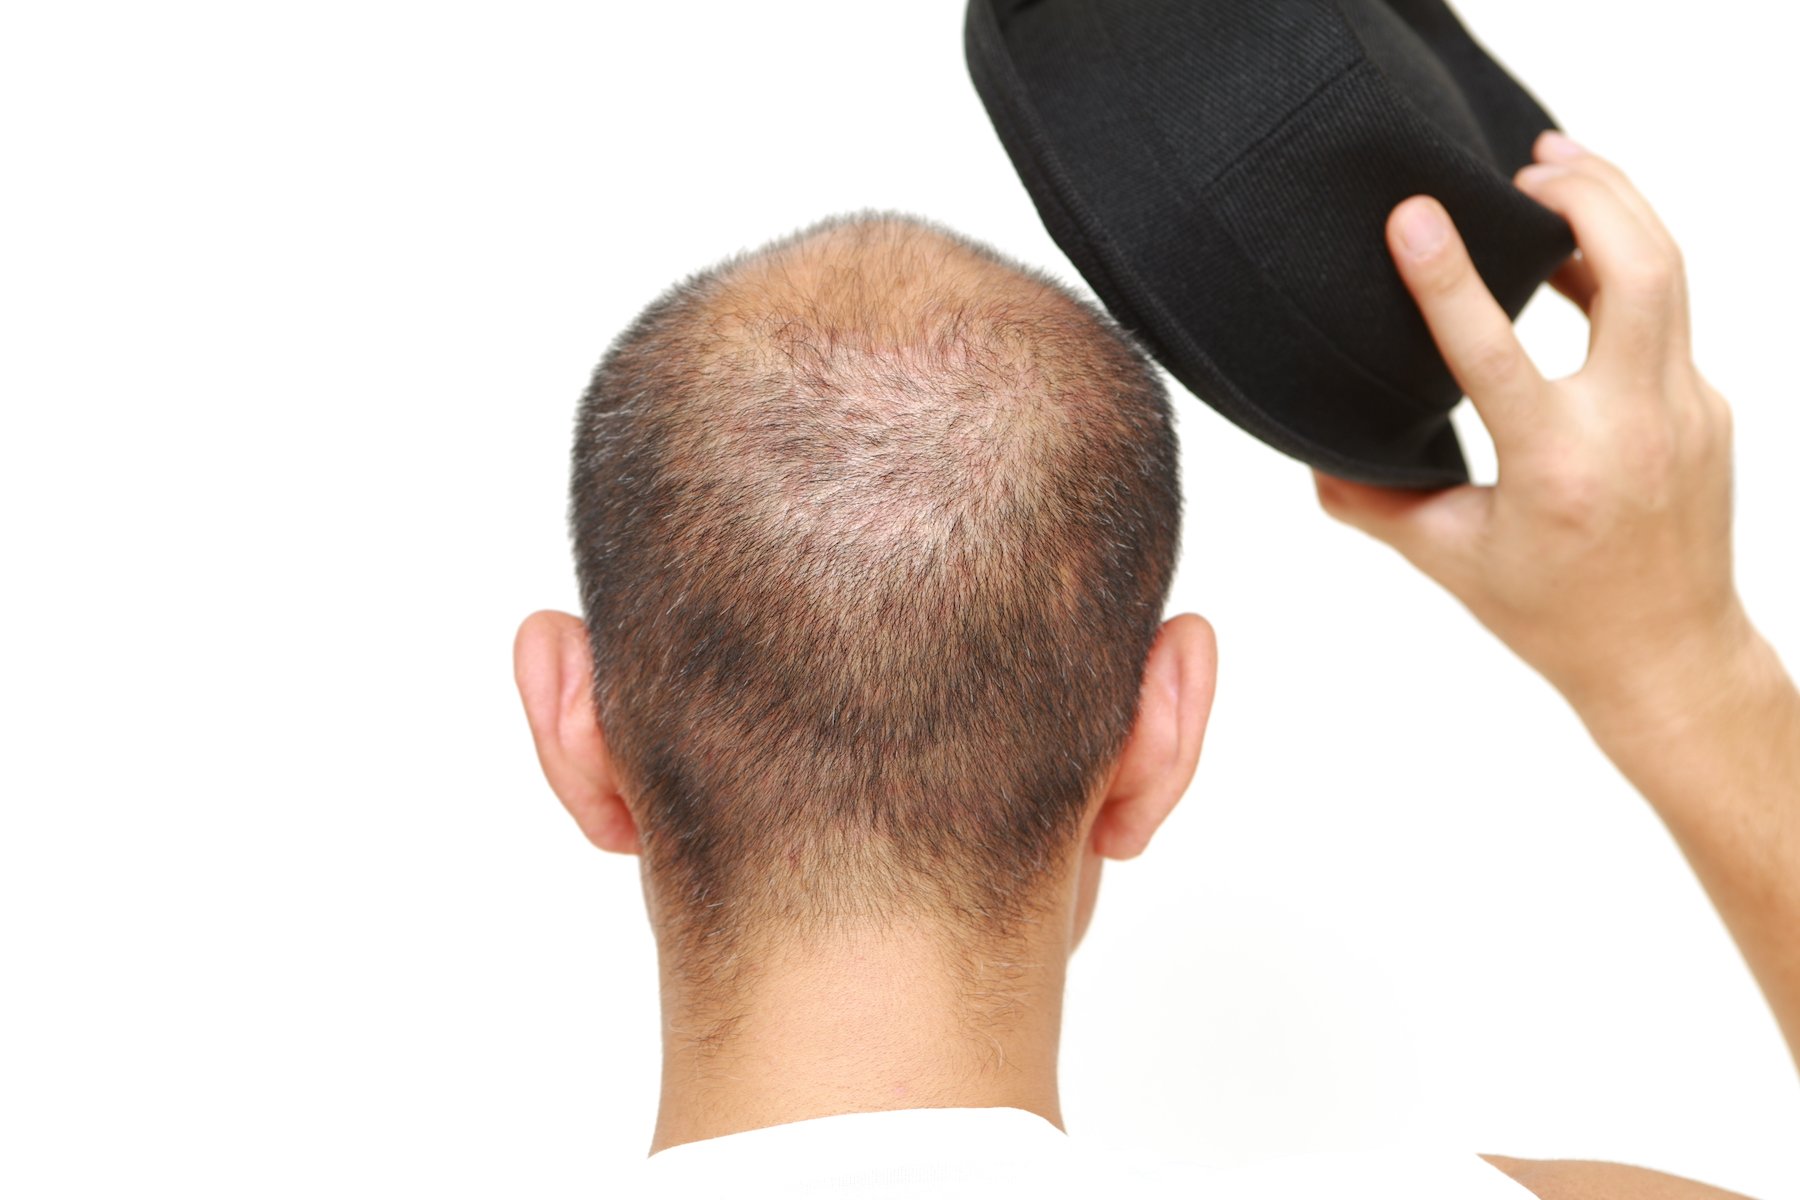 DO HATS CAUSE HAIR LOSS?